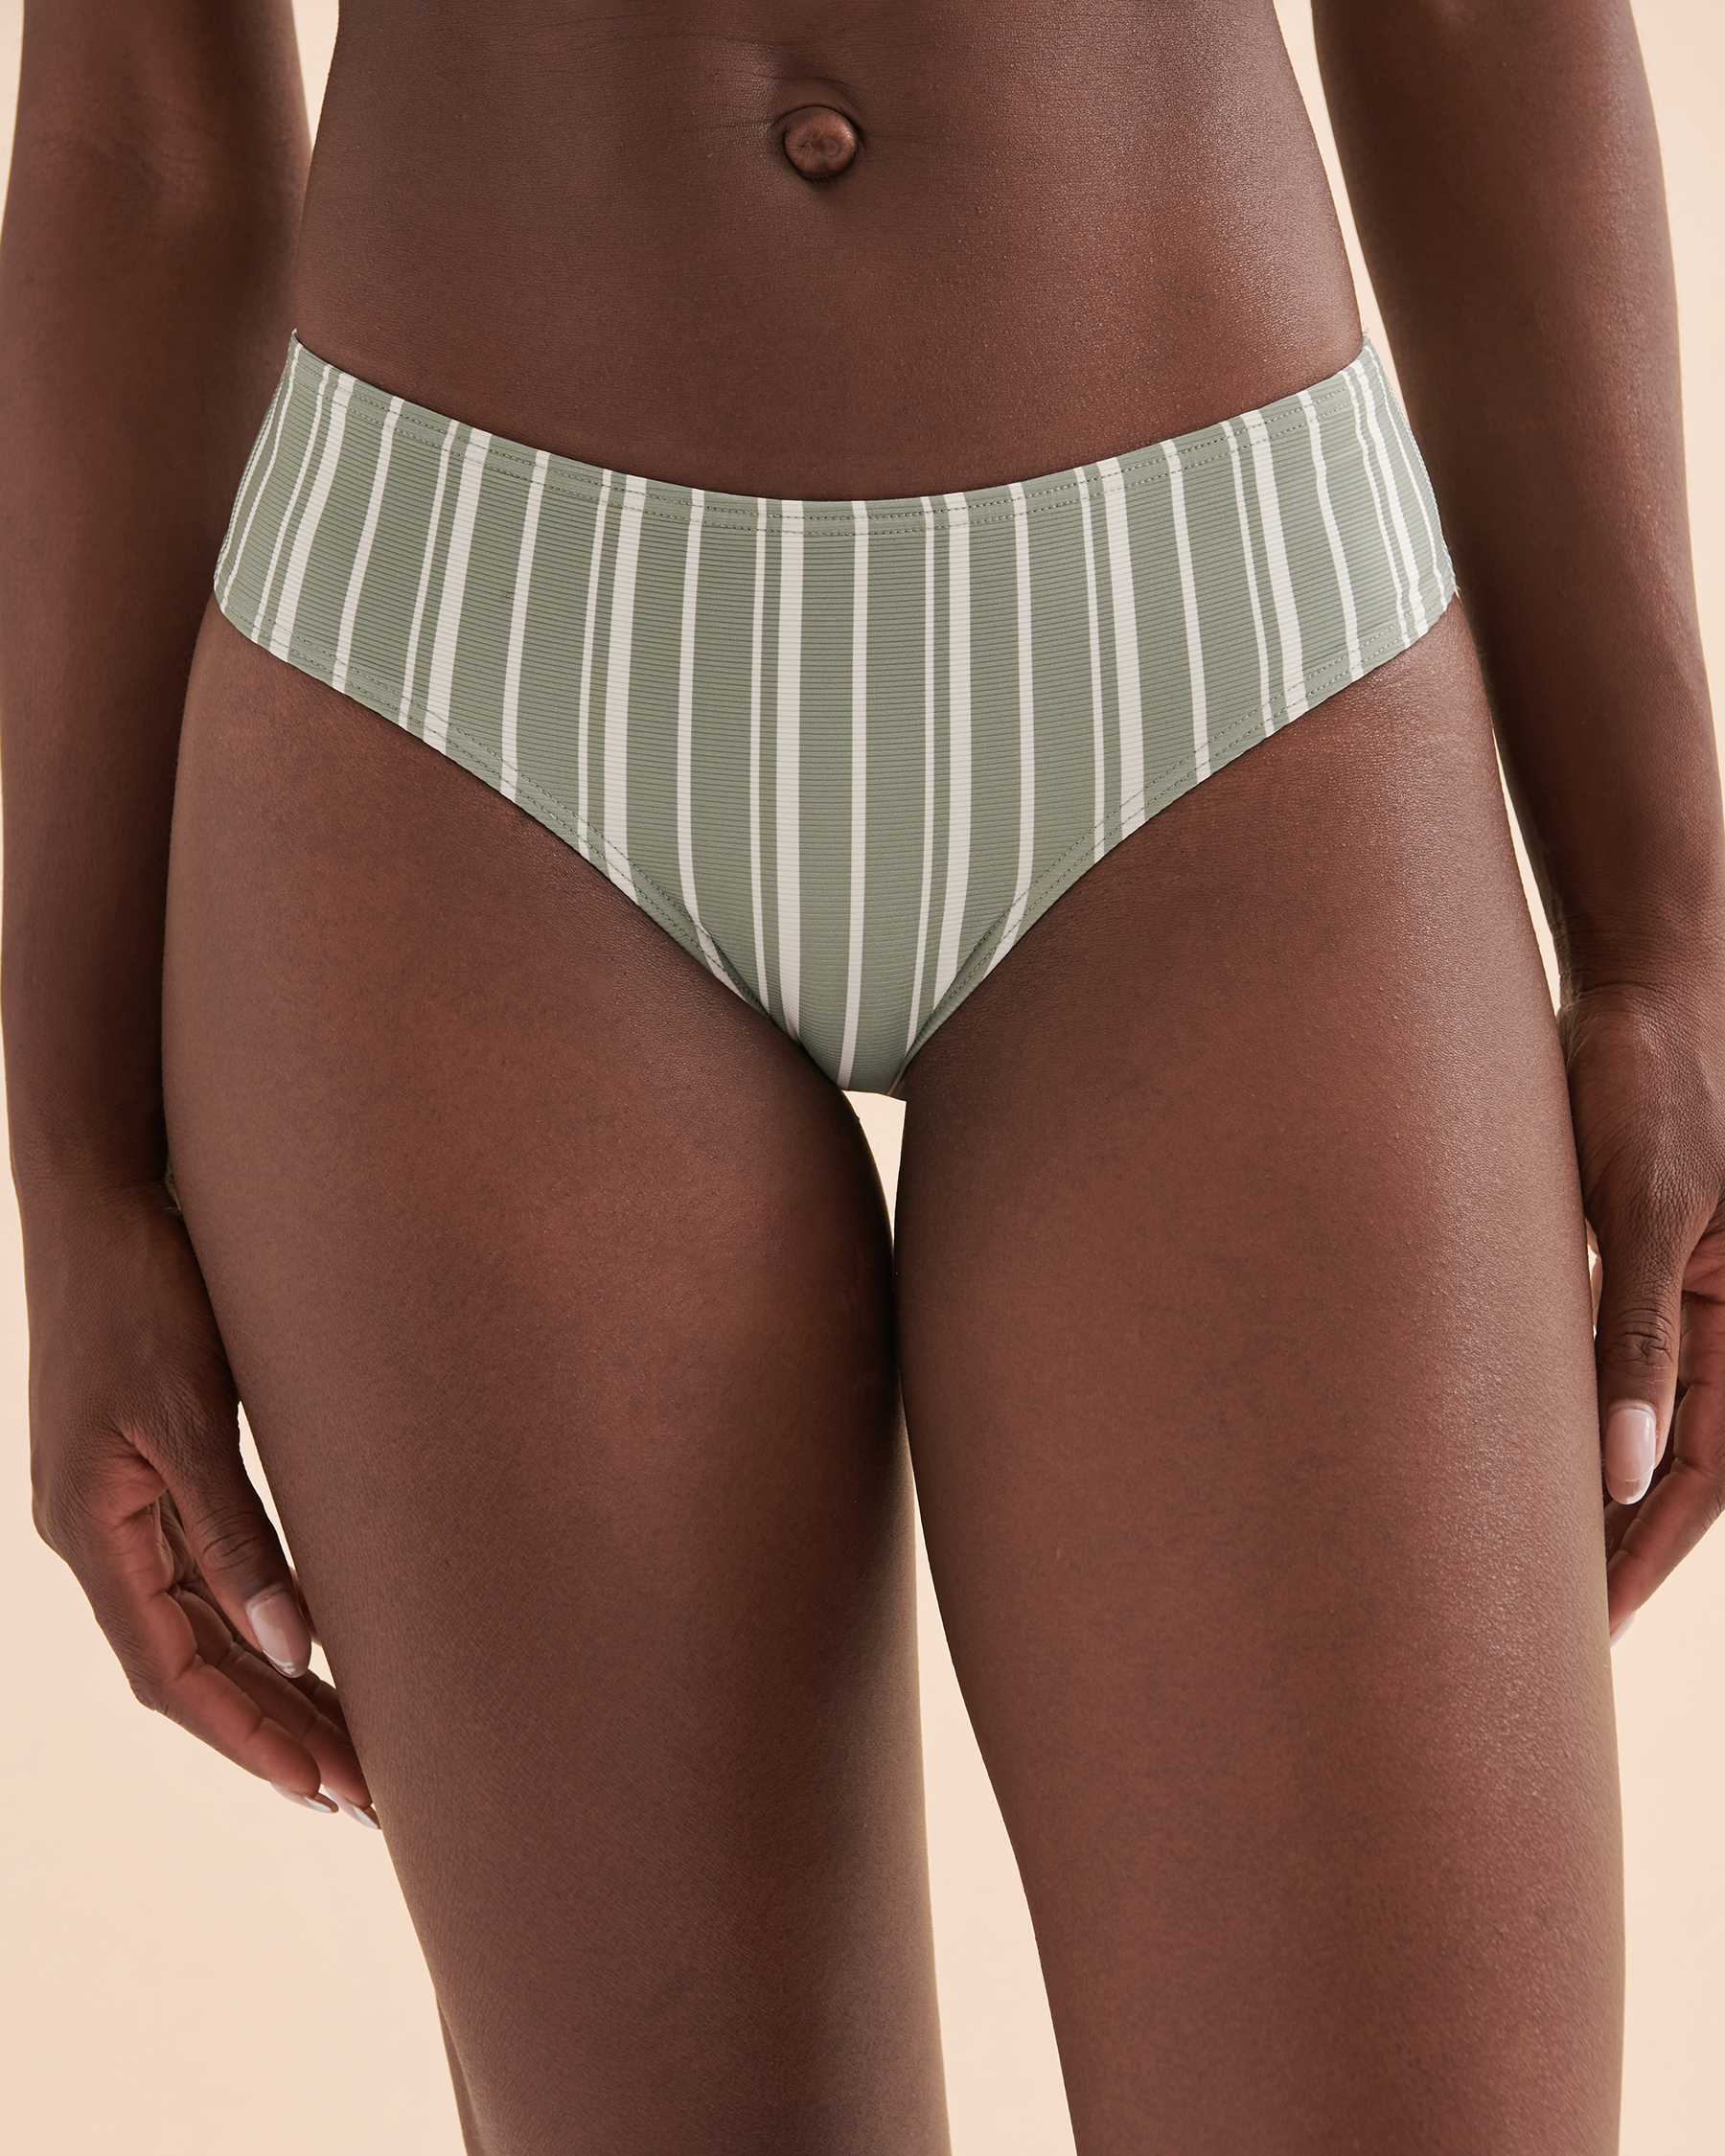 TROPIK Textured Stripes Cheeky Bikini Bottom Green stripe 01300244 - View3